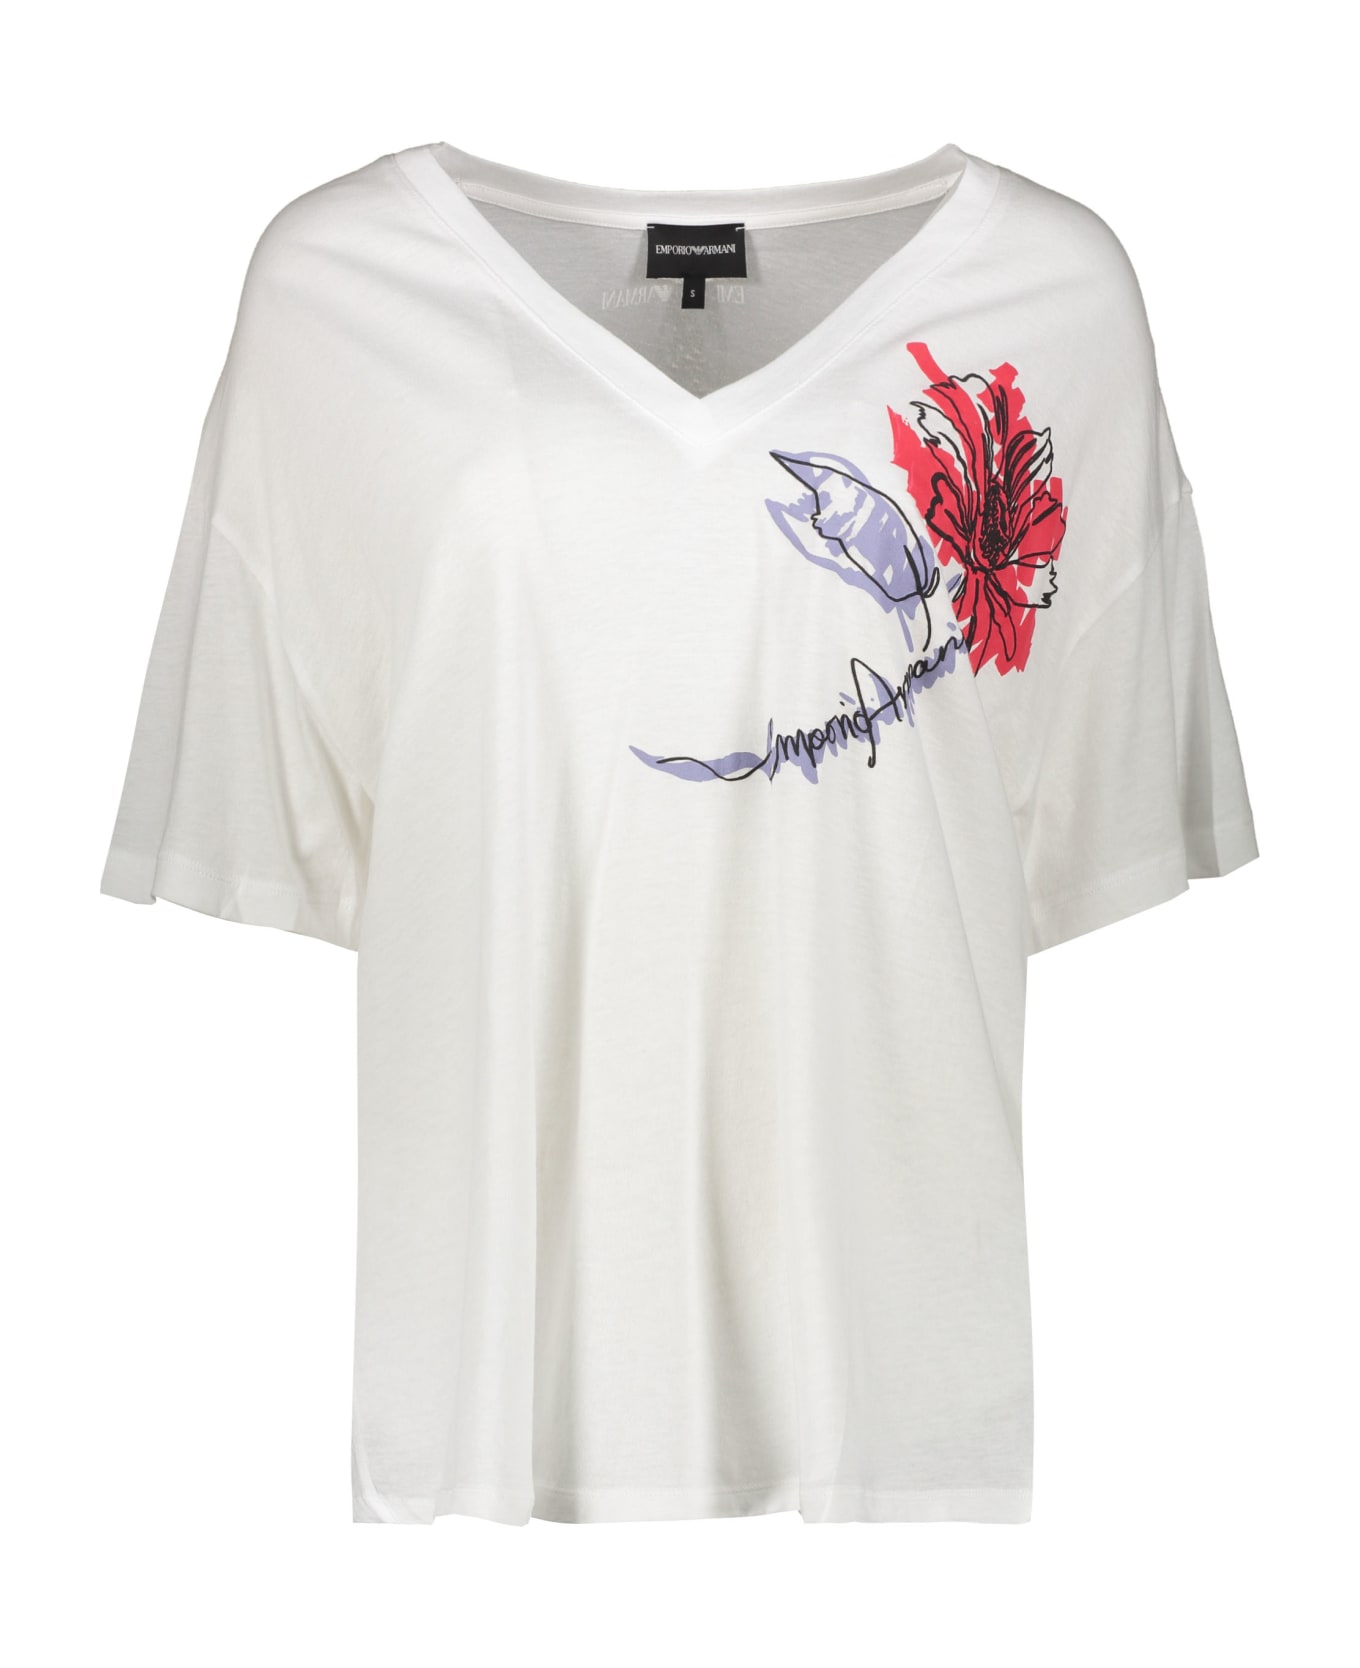 Emporio Armani Printed T-shirt - White